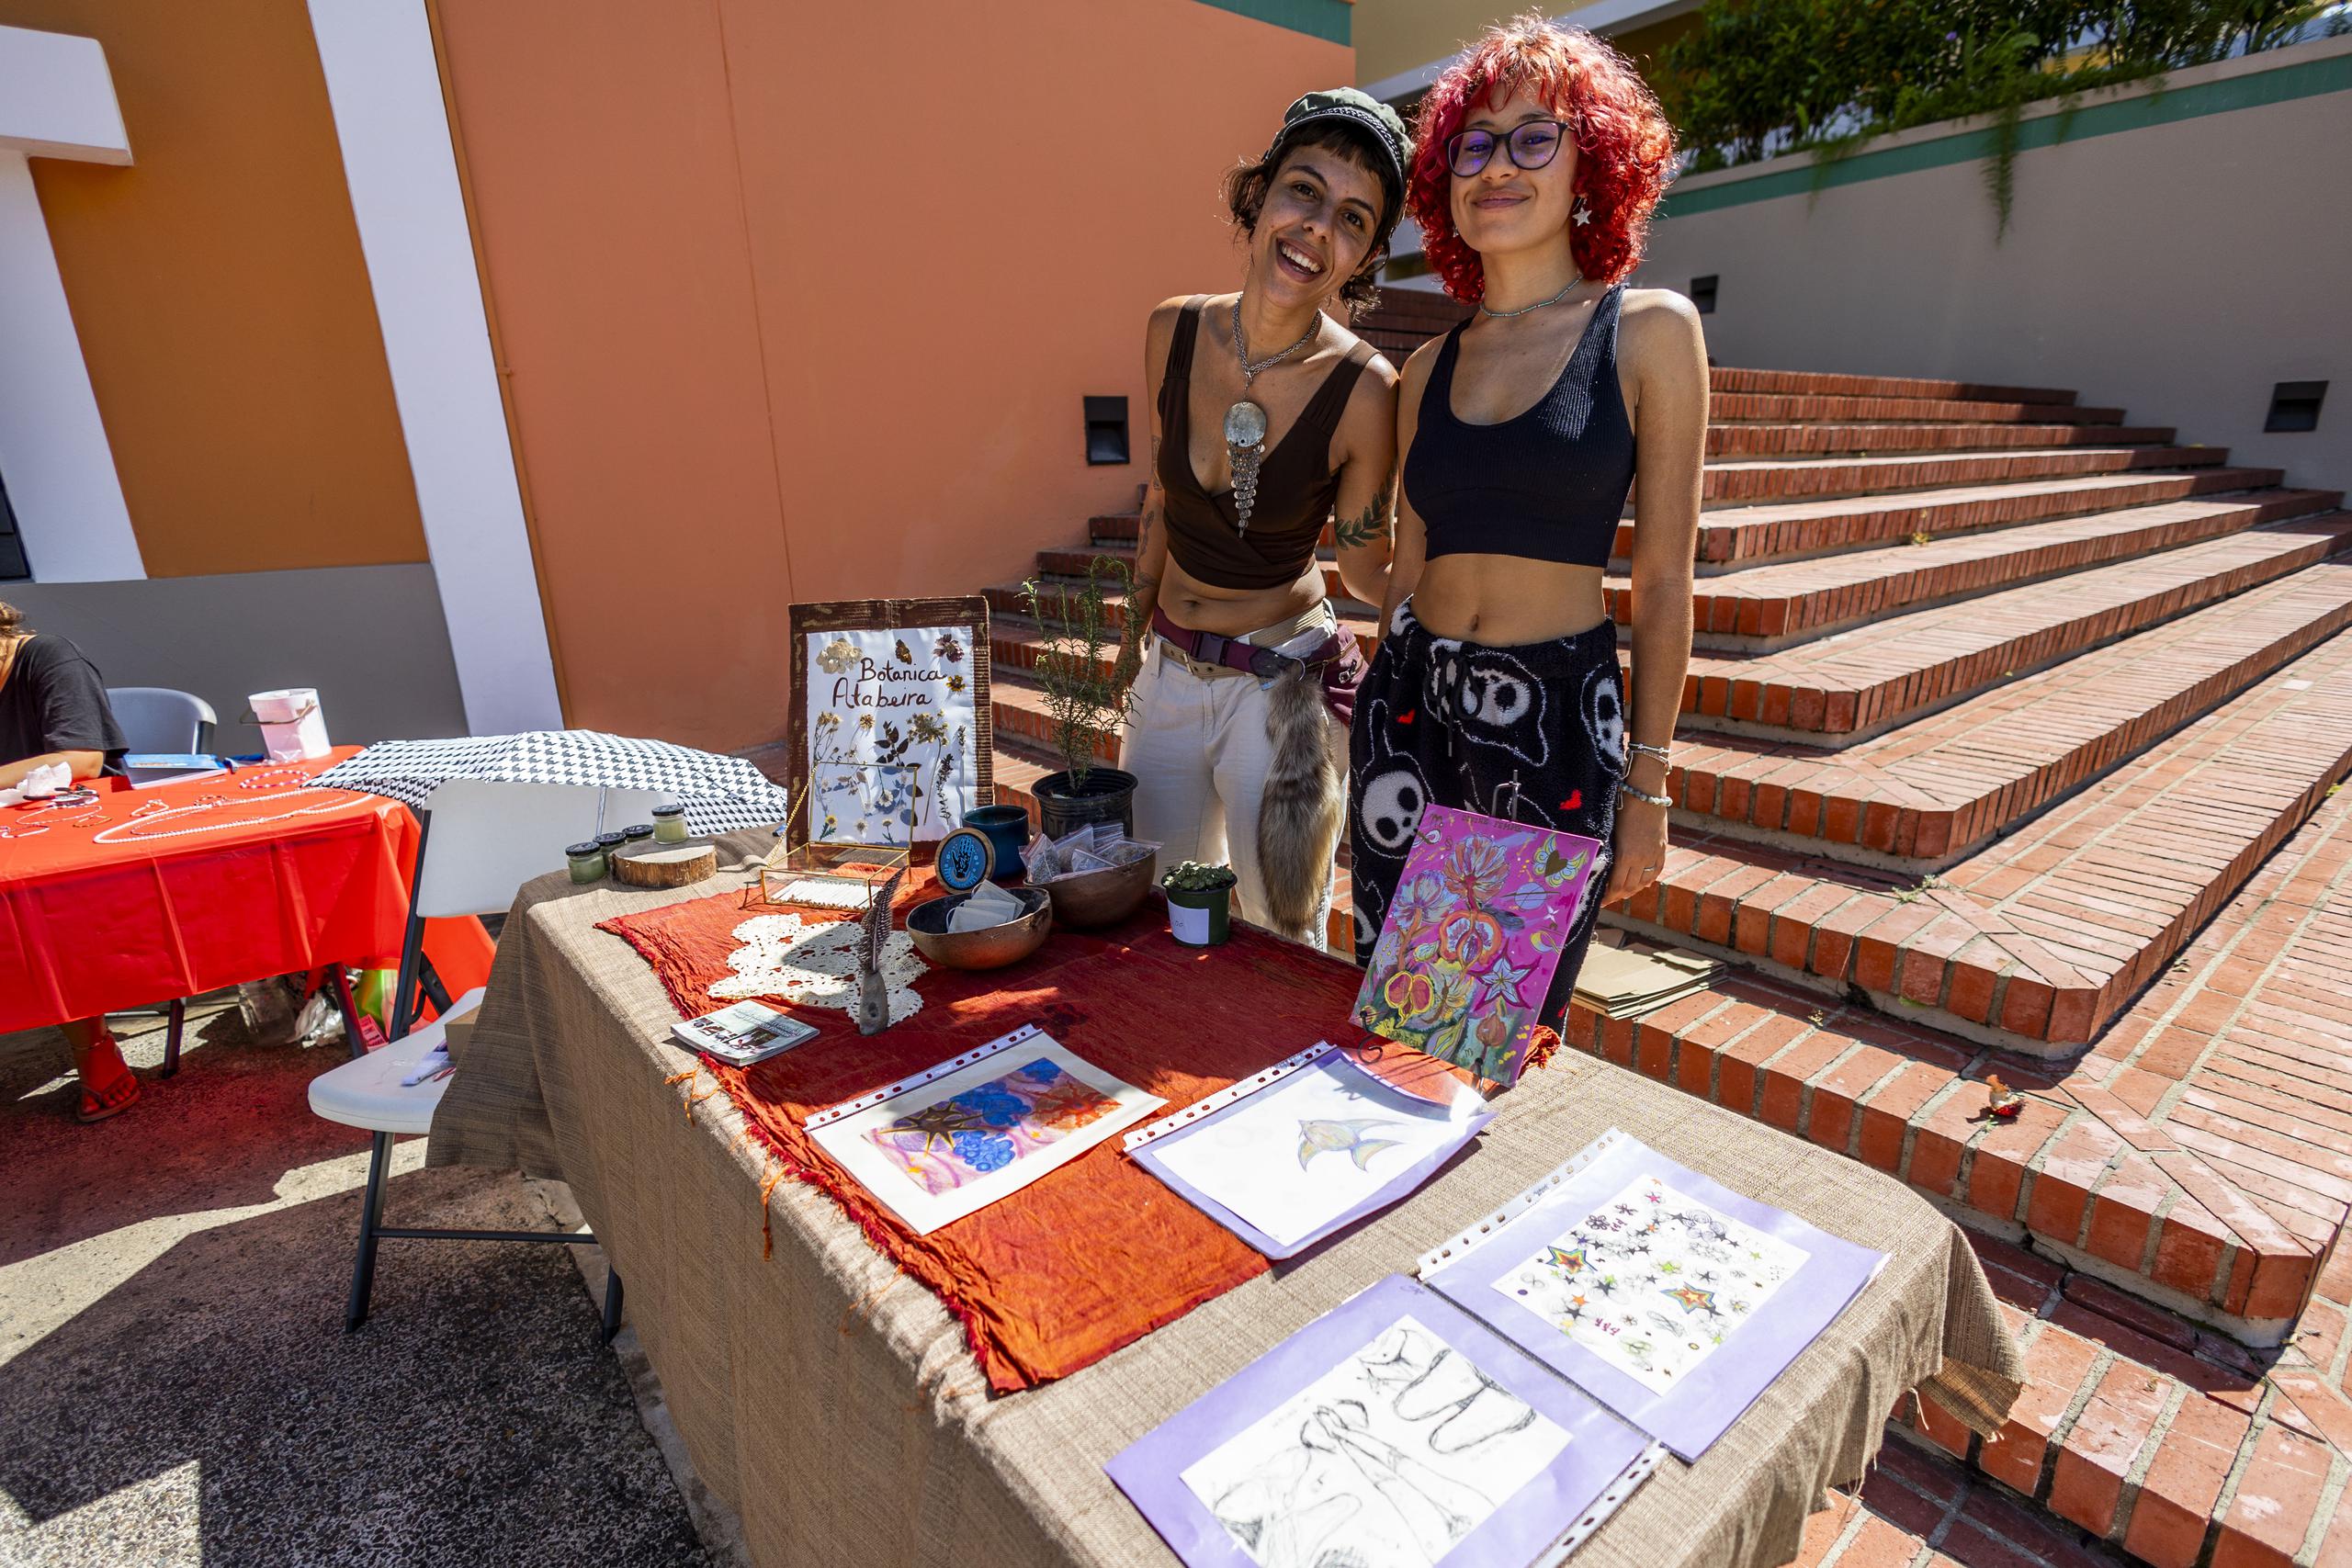 Daniela Peña y Alexandra Pérez, de Botánica Atabeira, en el mercado estudiantil

Xavier Garcia / Fotoperiodista 